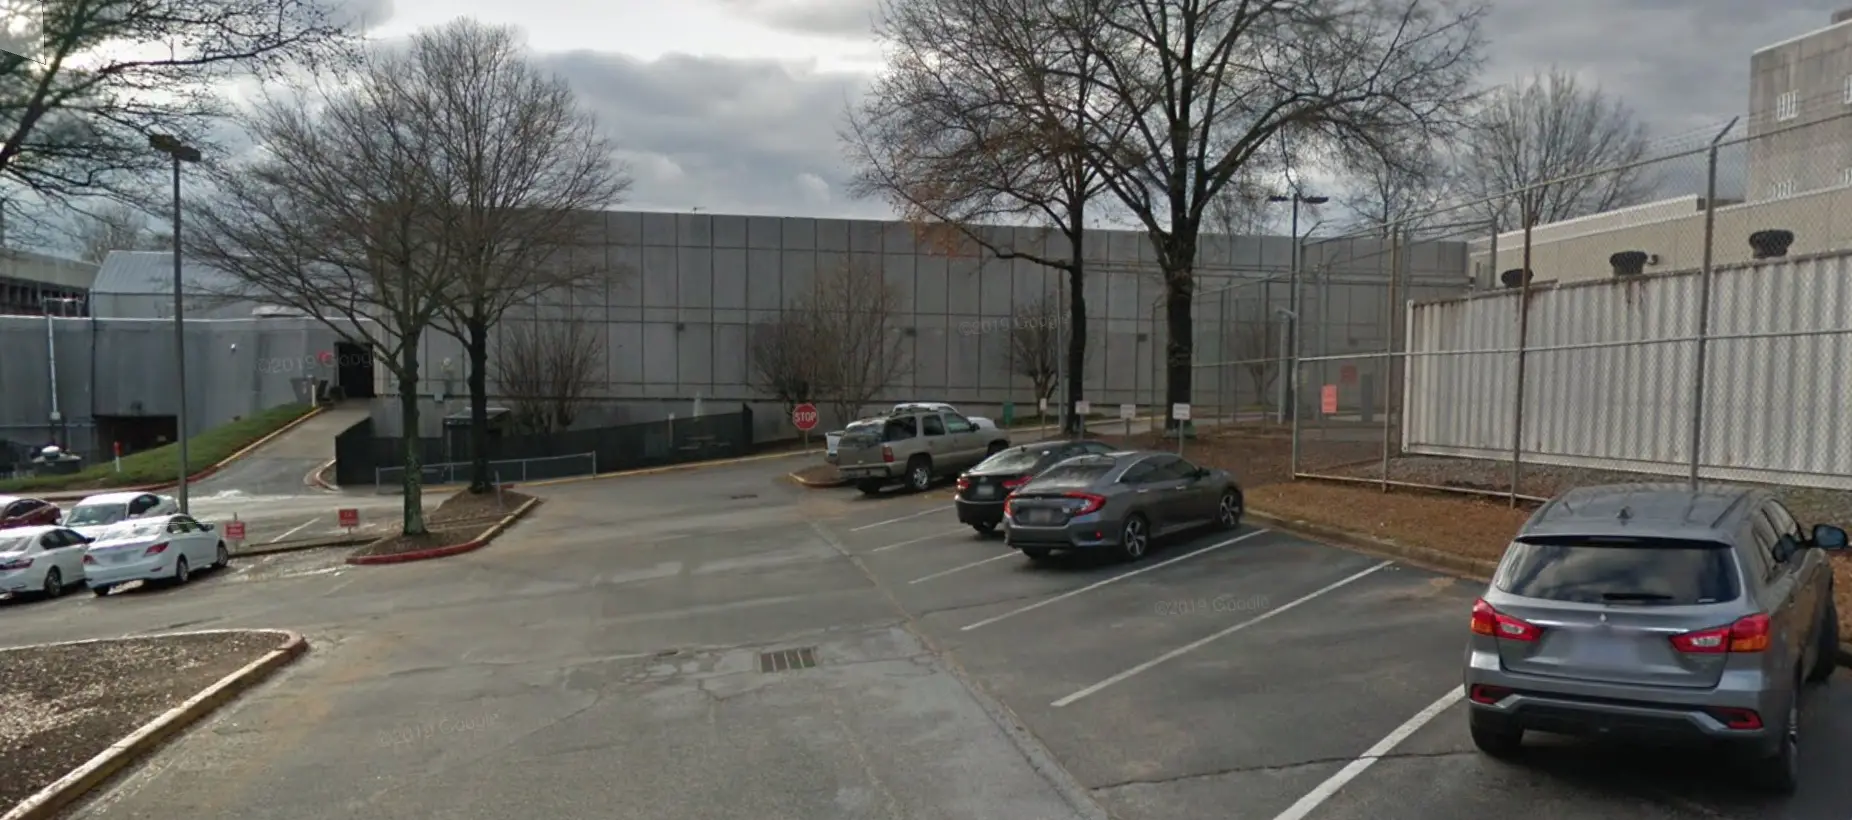 Greenville County Detention Center, Greenville, SC (South Carolina)